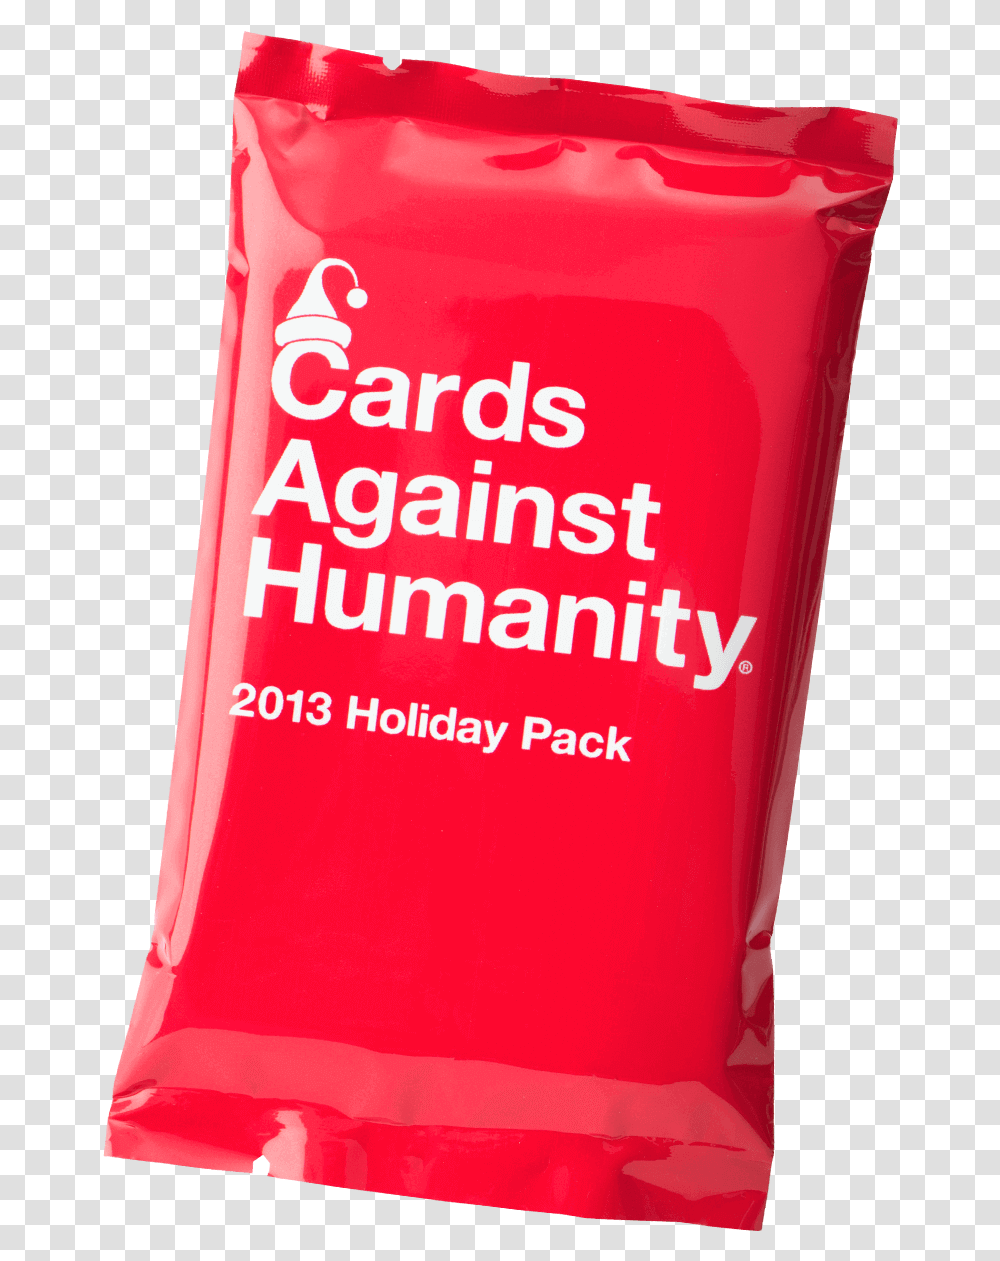 Cards Against Humanity Price, Bottle, Plant, Soda, Beverage Transparent Png